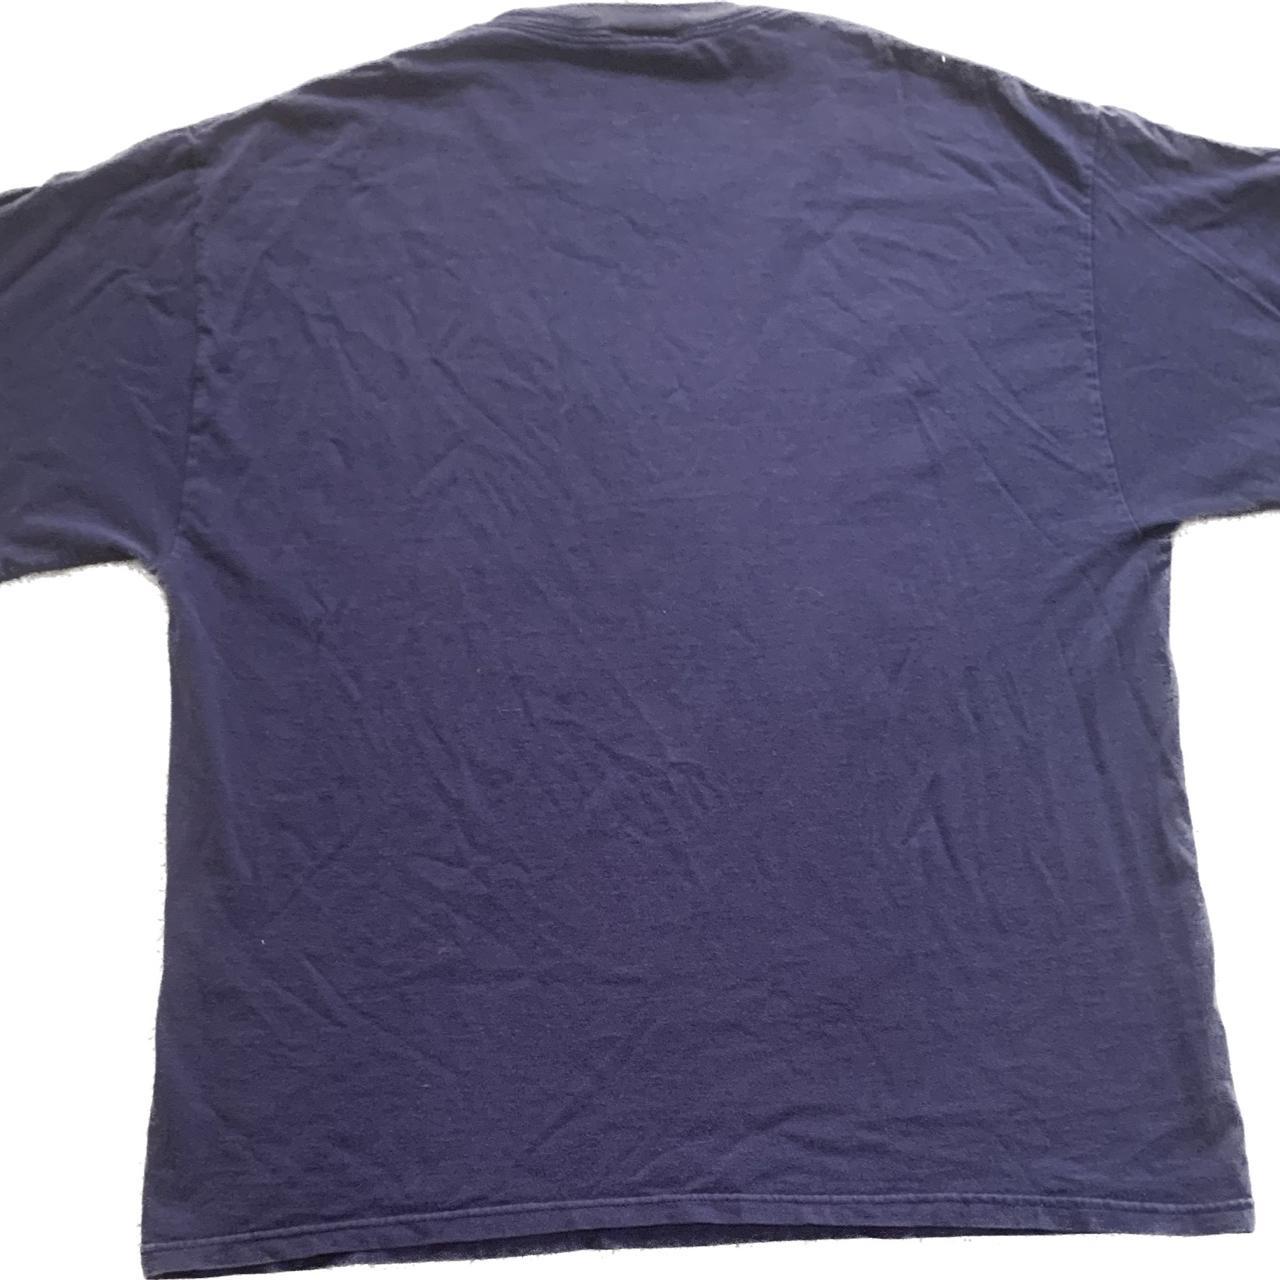 Freeze 24-7 Men's Navy and Blue T-shirt (4)